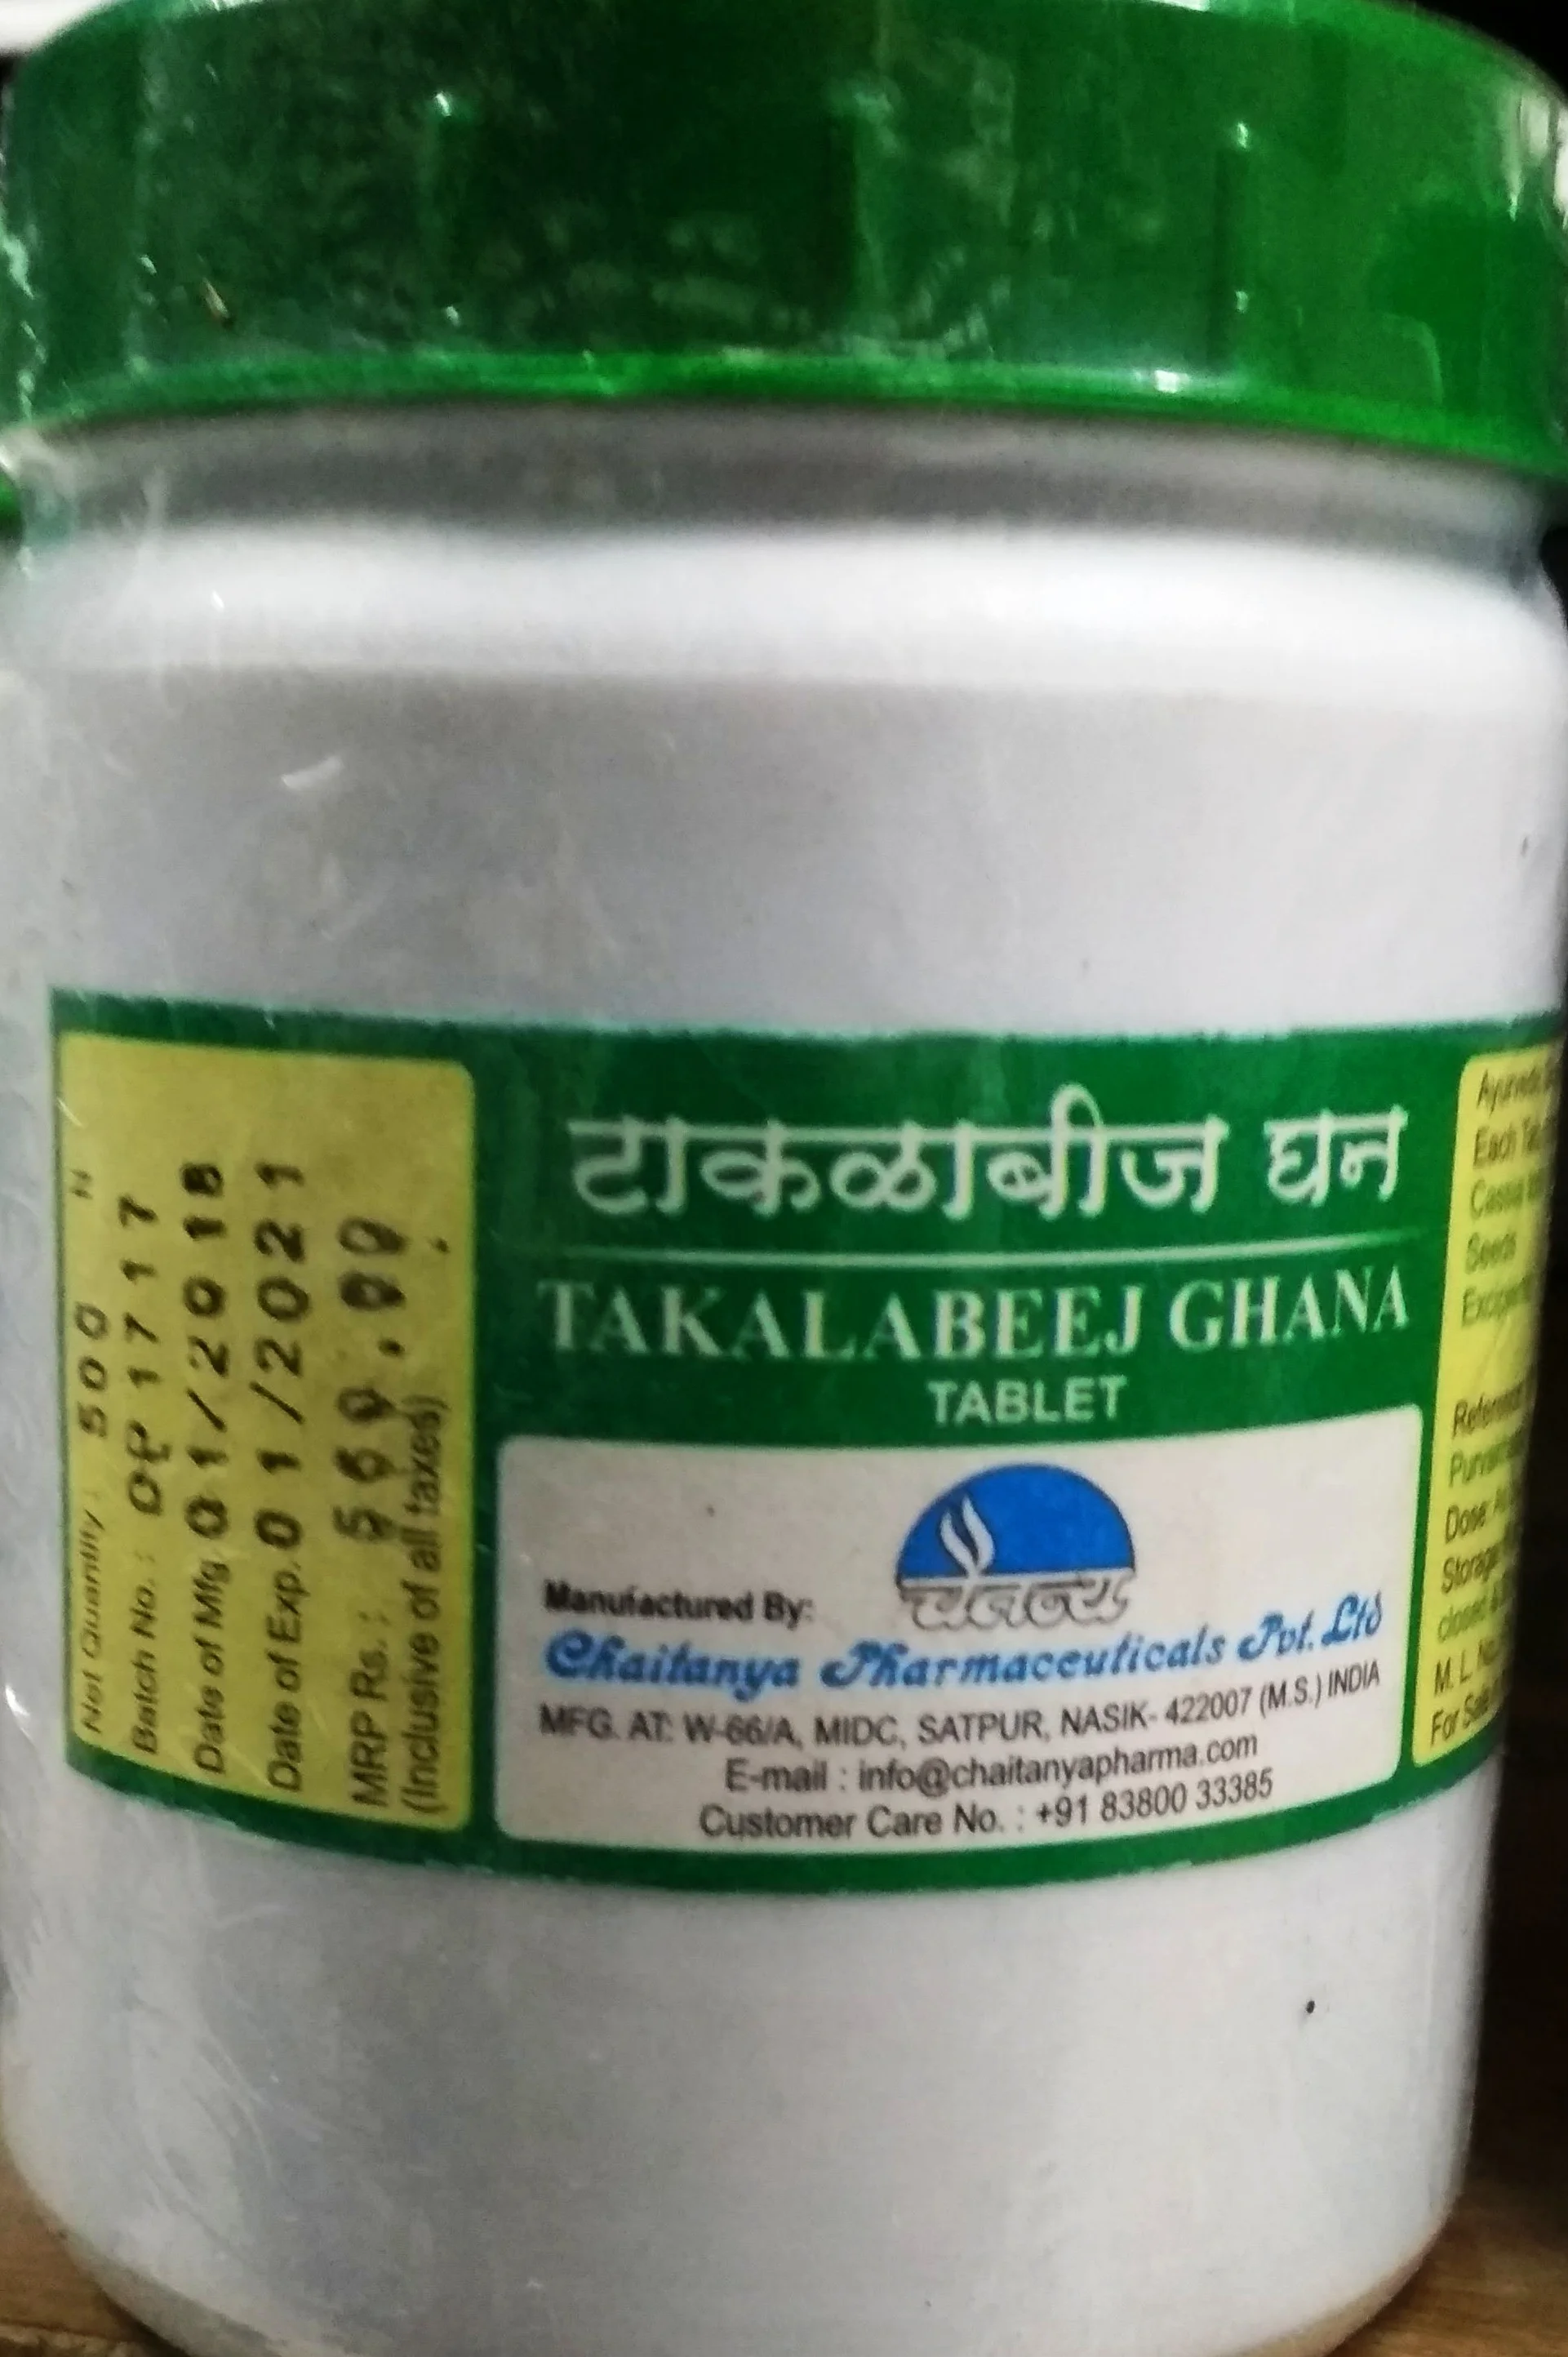 takalabeej ghana 2000tab upto 20% off free shipping chaitanya pharmaceuticals